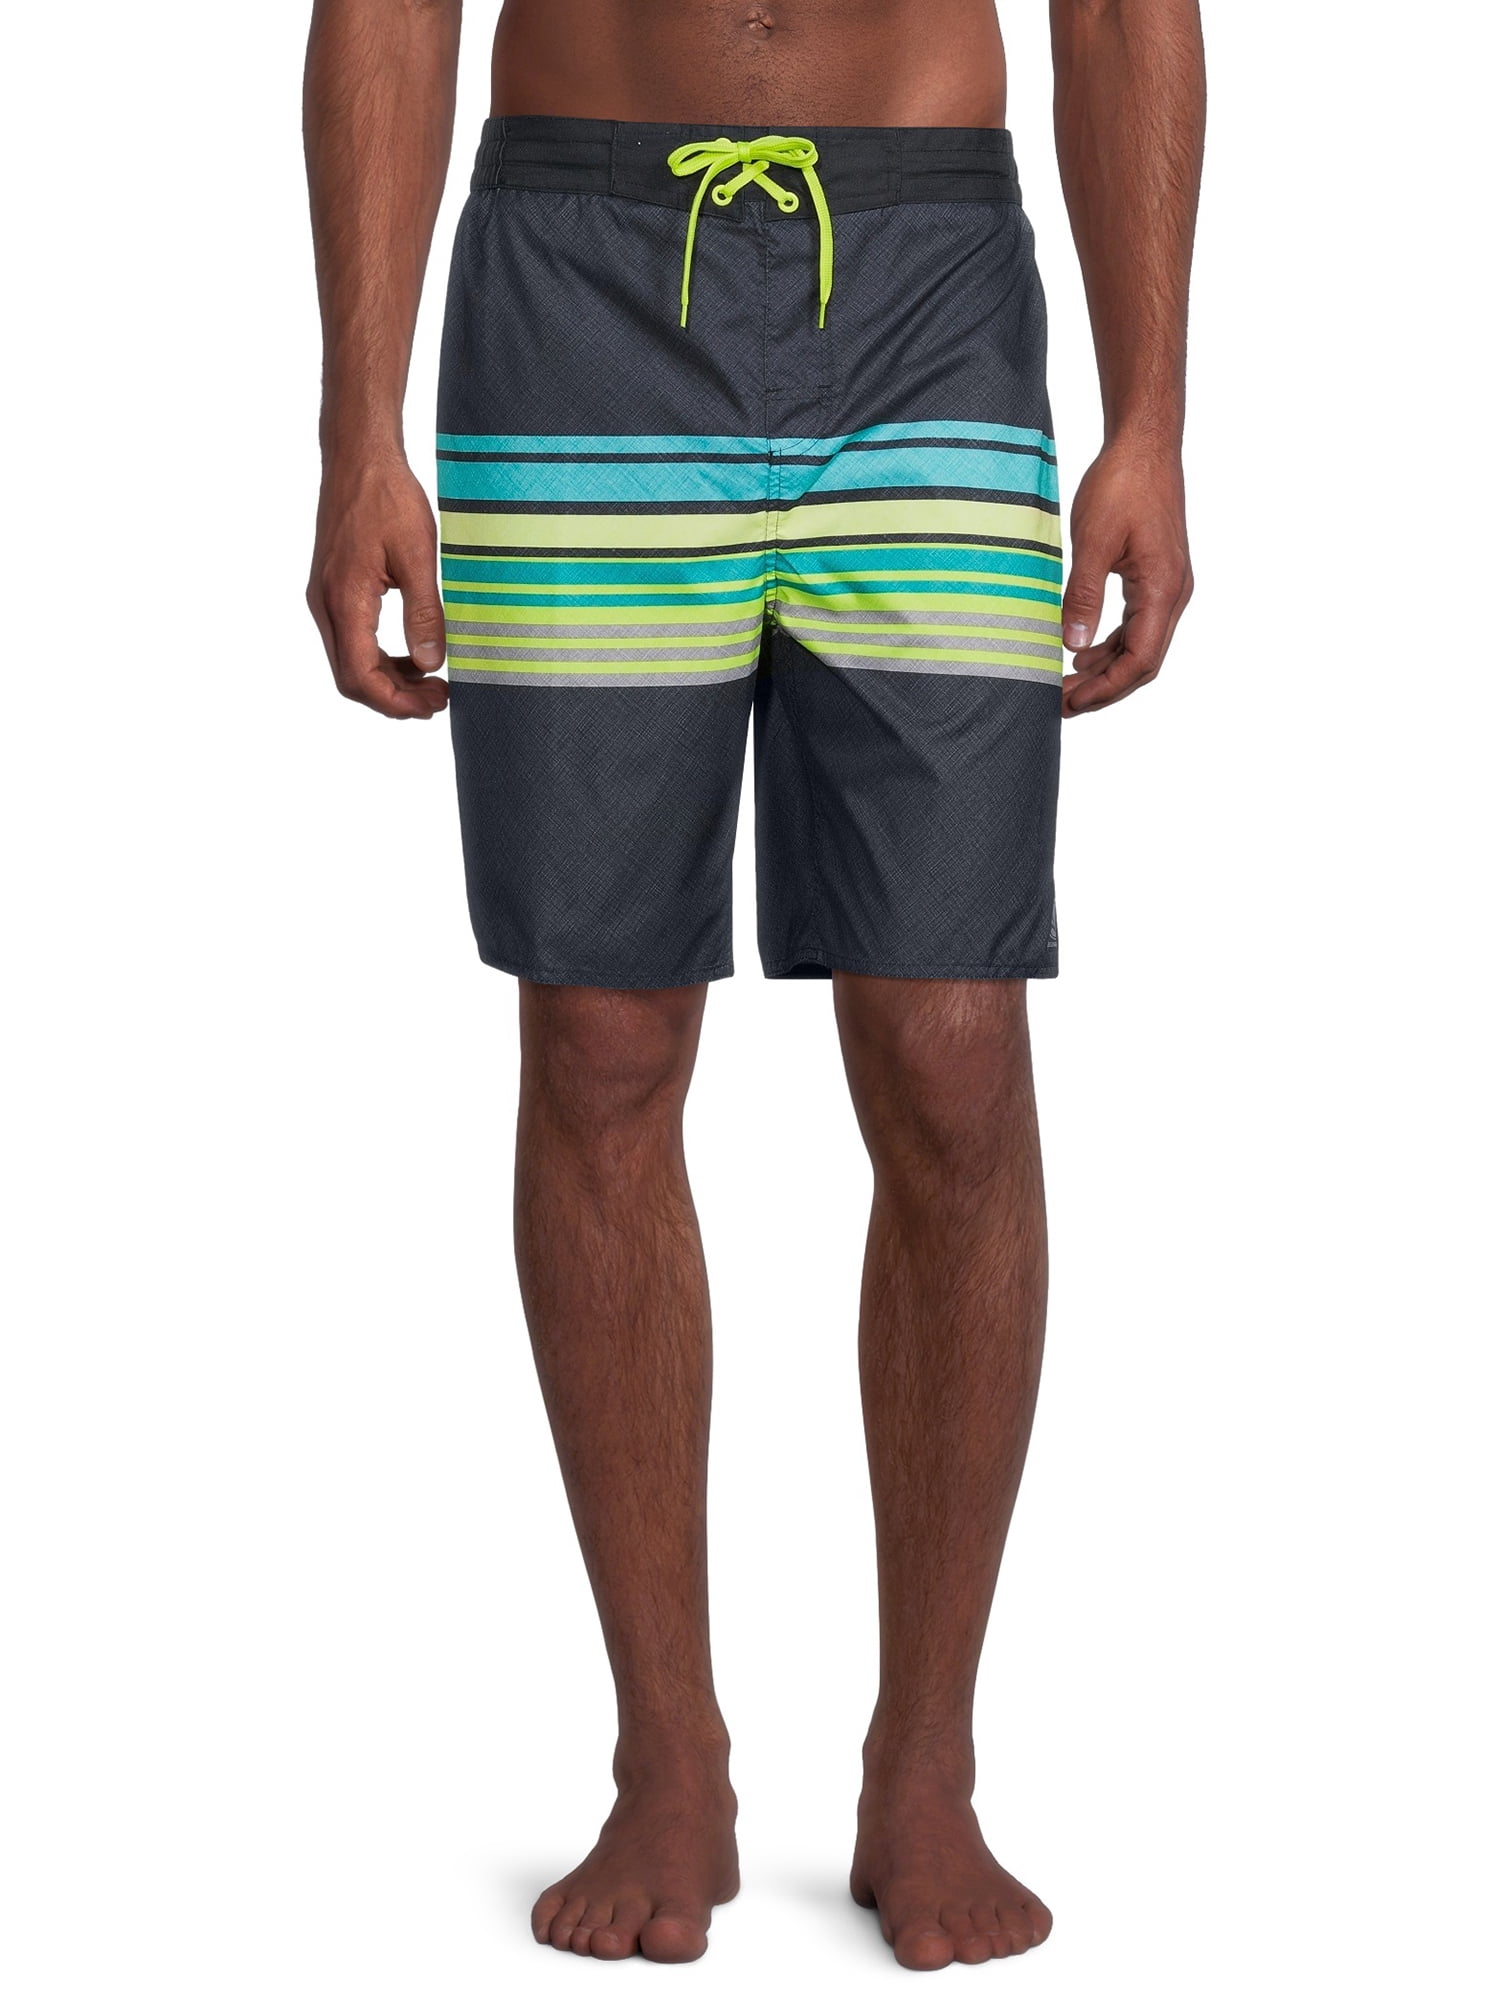 NEW Hurley Phantom 20" Baja Teal Green Mens Board Shorts Bathing Suit Striped 